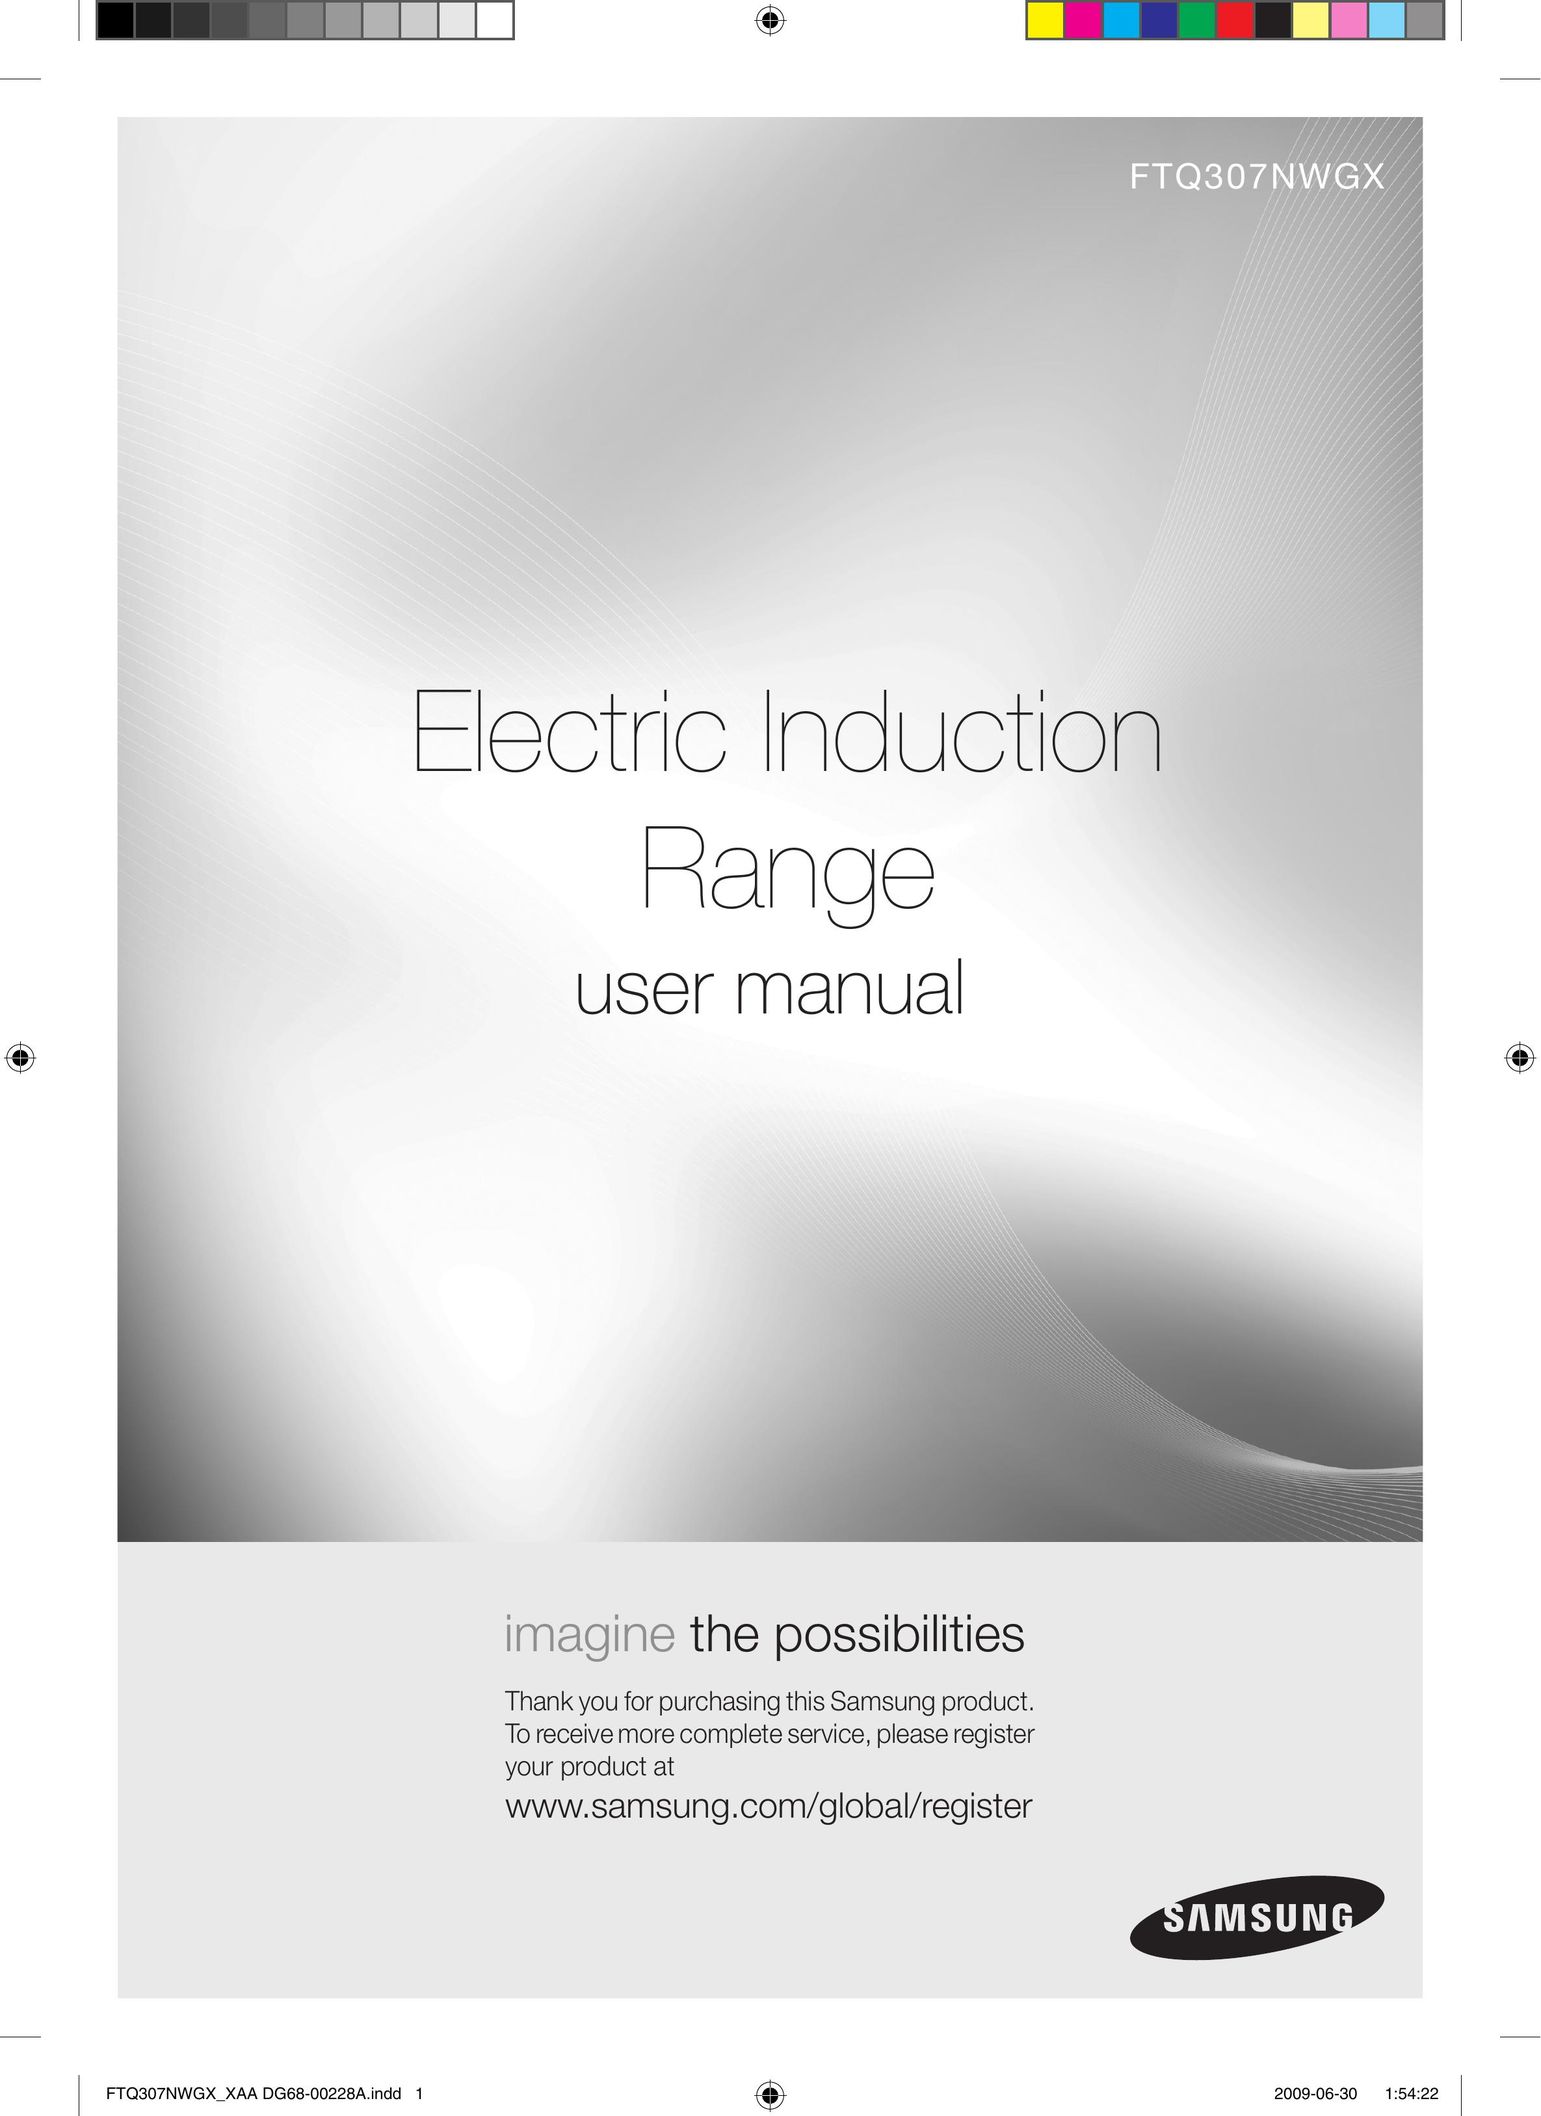 Samsung FTQ307 Range User Manual